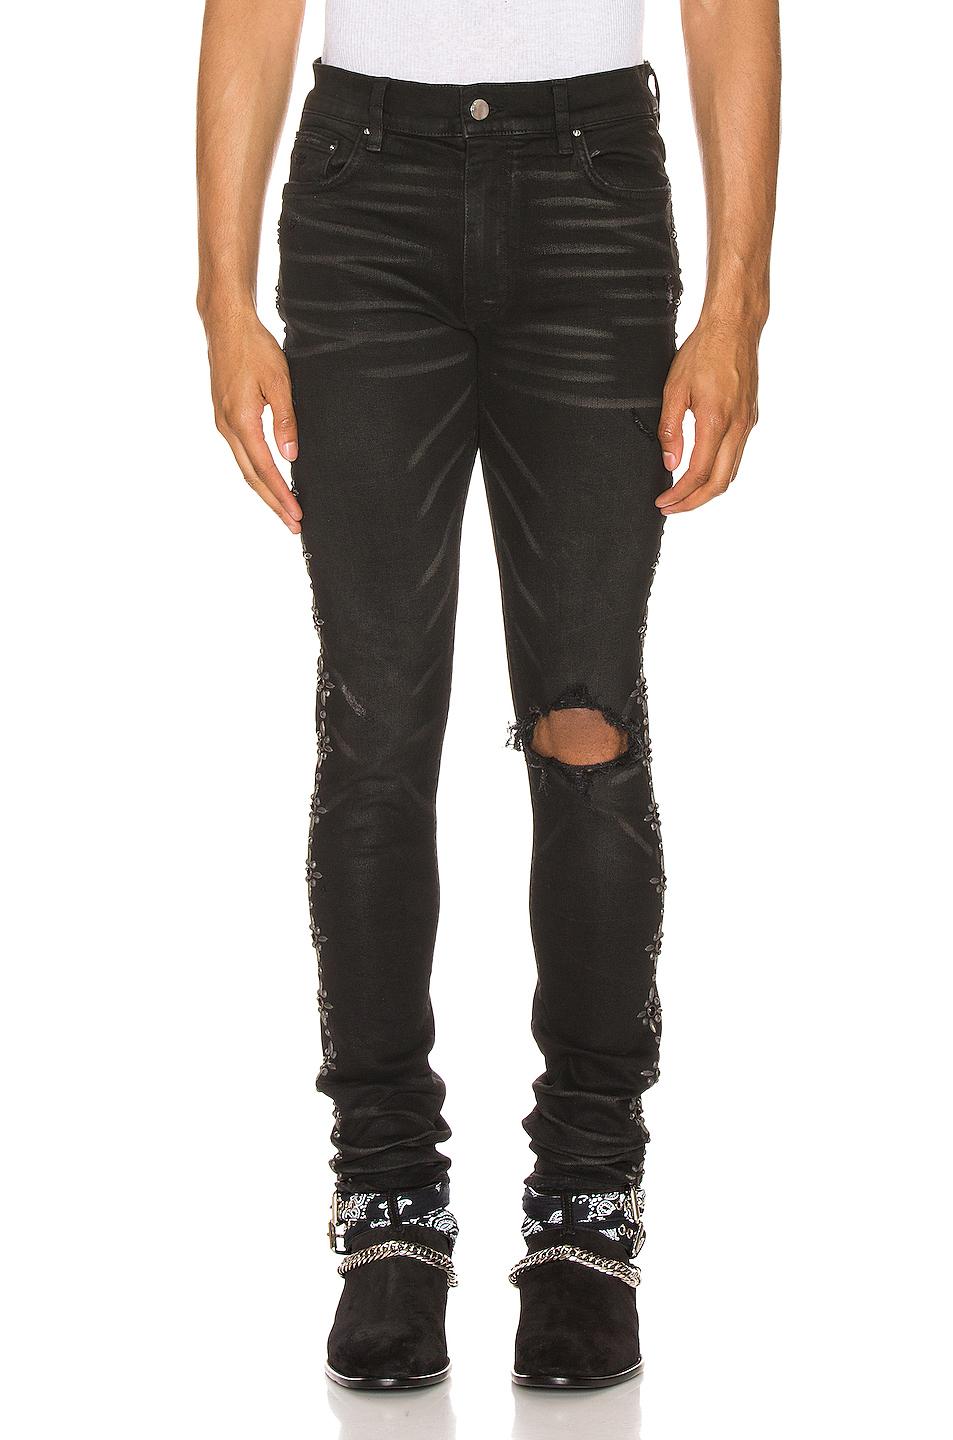 Amiri Cotton Side Studded Broken Jean in Black for Men - Lyst